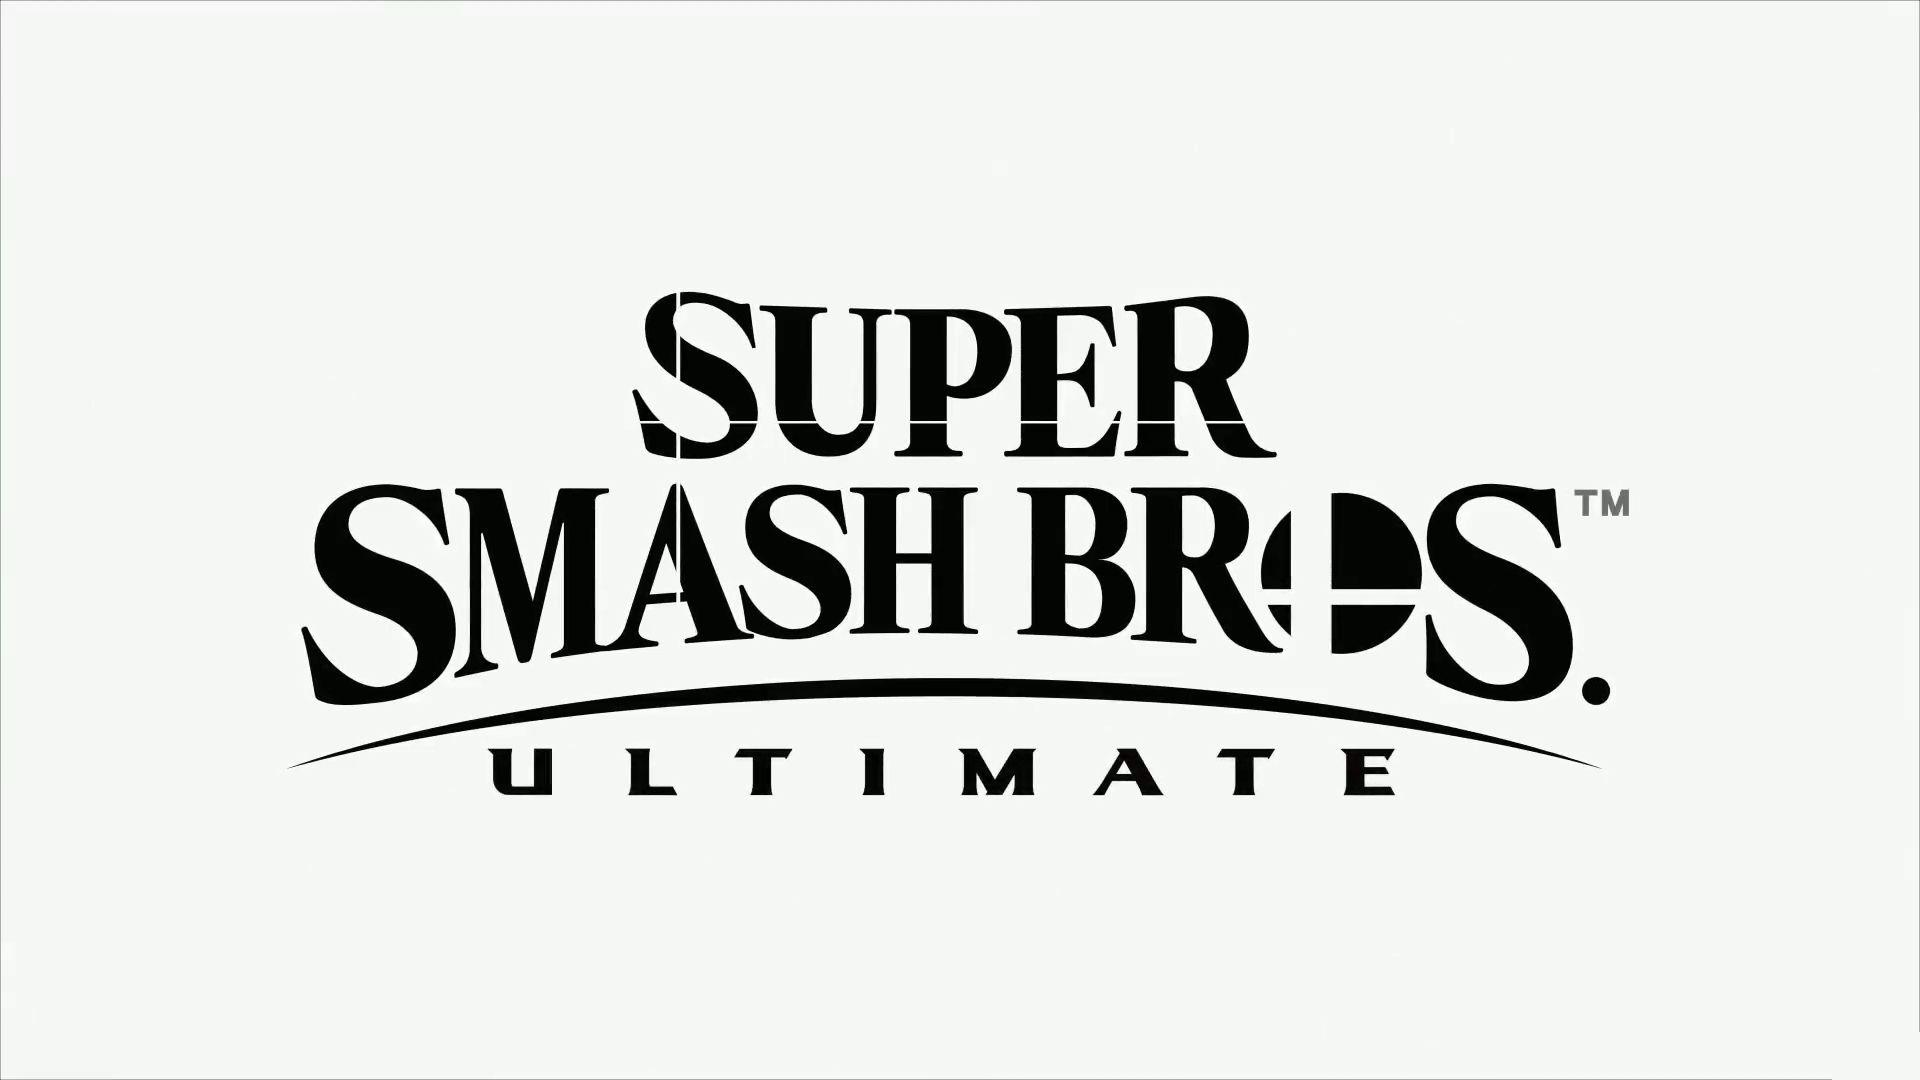 Brace yourself: Super Smash Bros. Ultimate release date is December